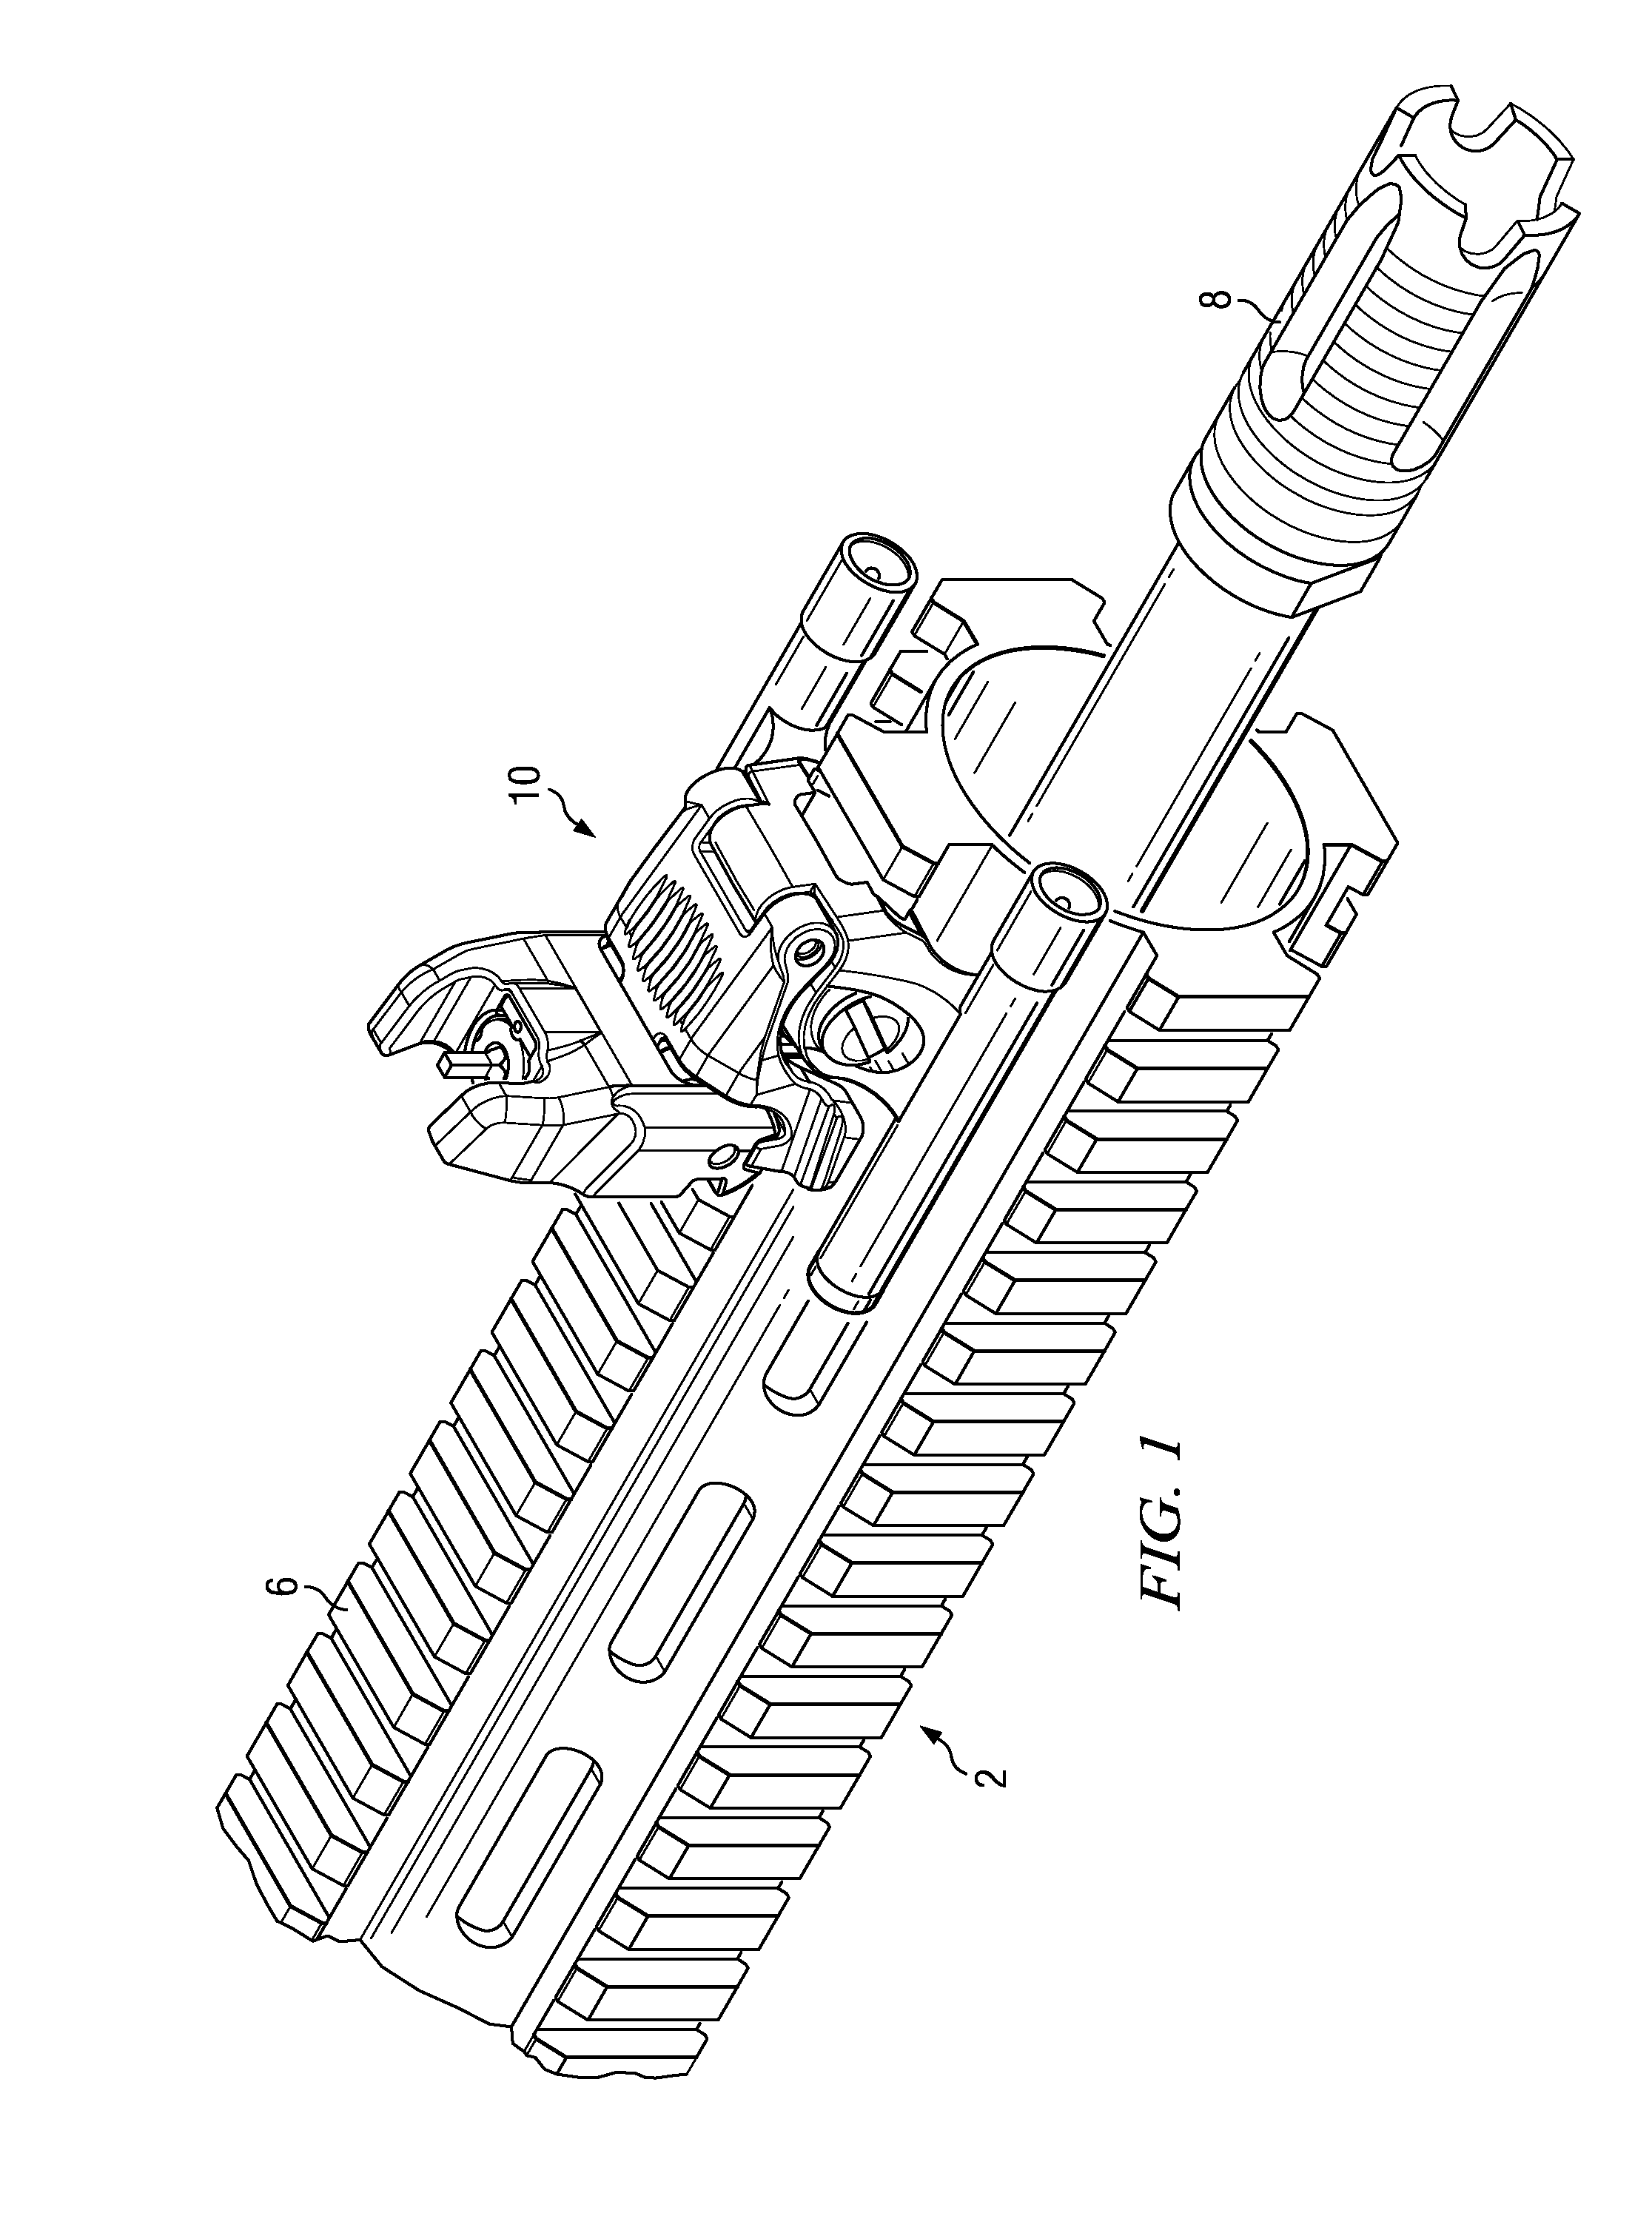 Forward Mounted Gun Sight with Illumination Apparatus